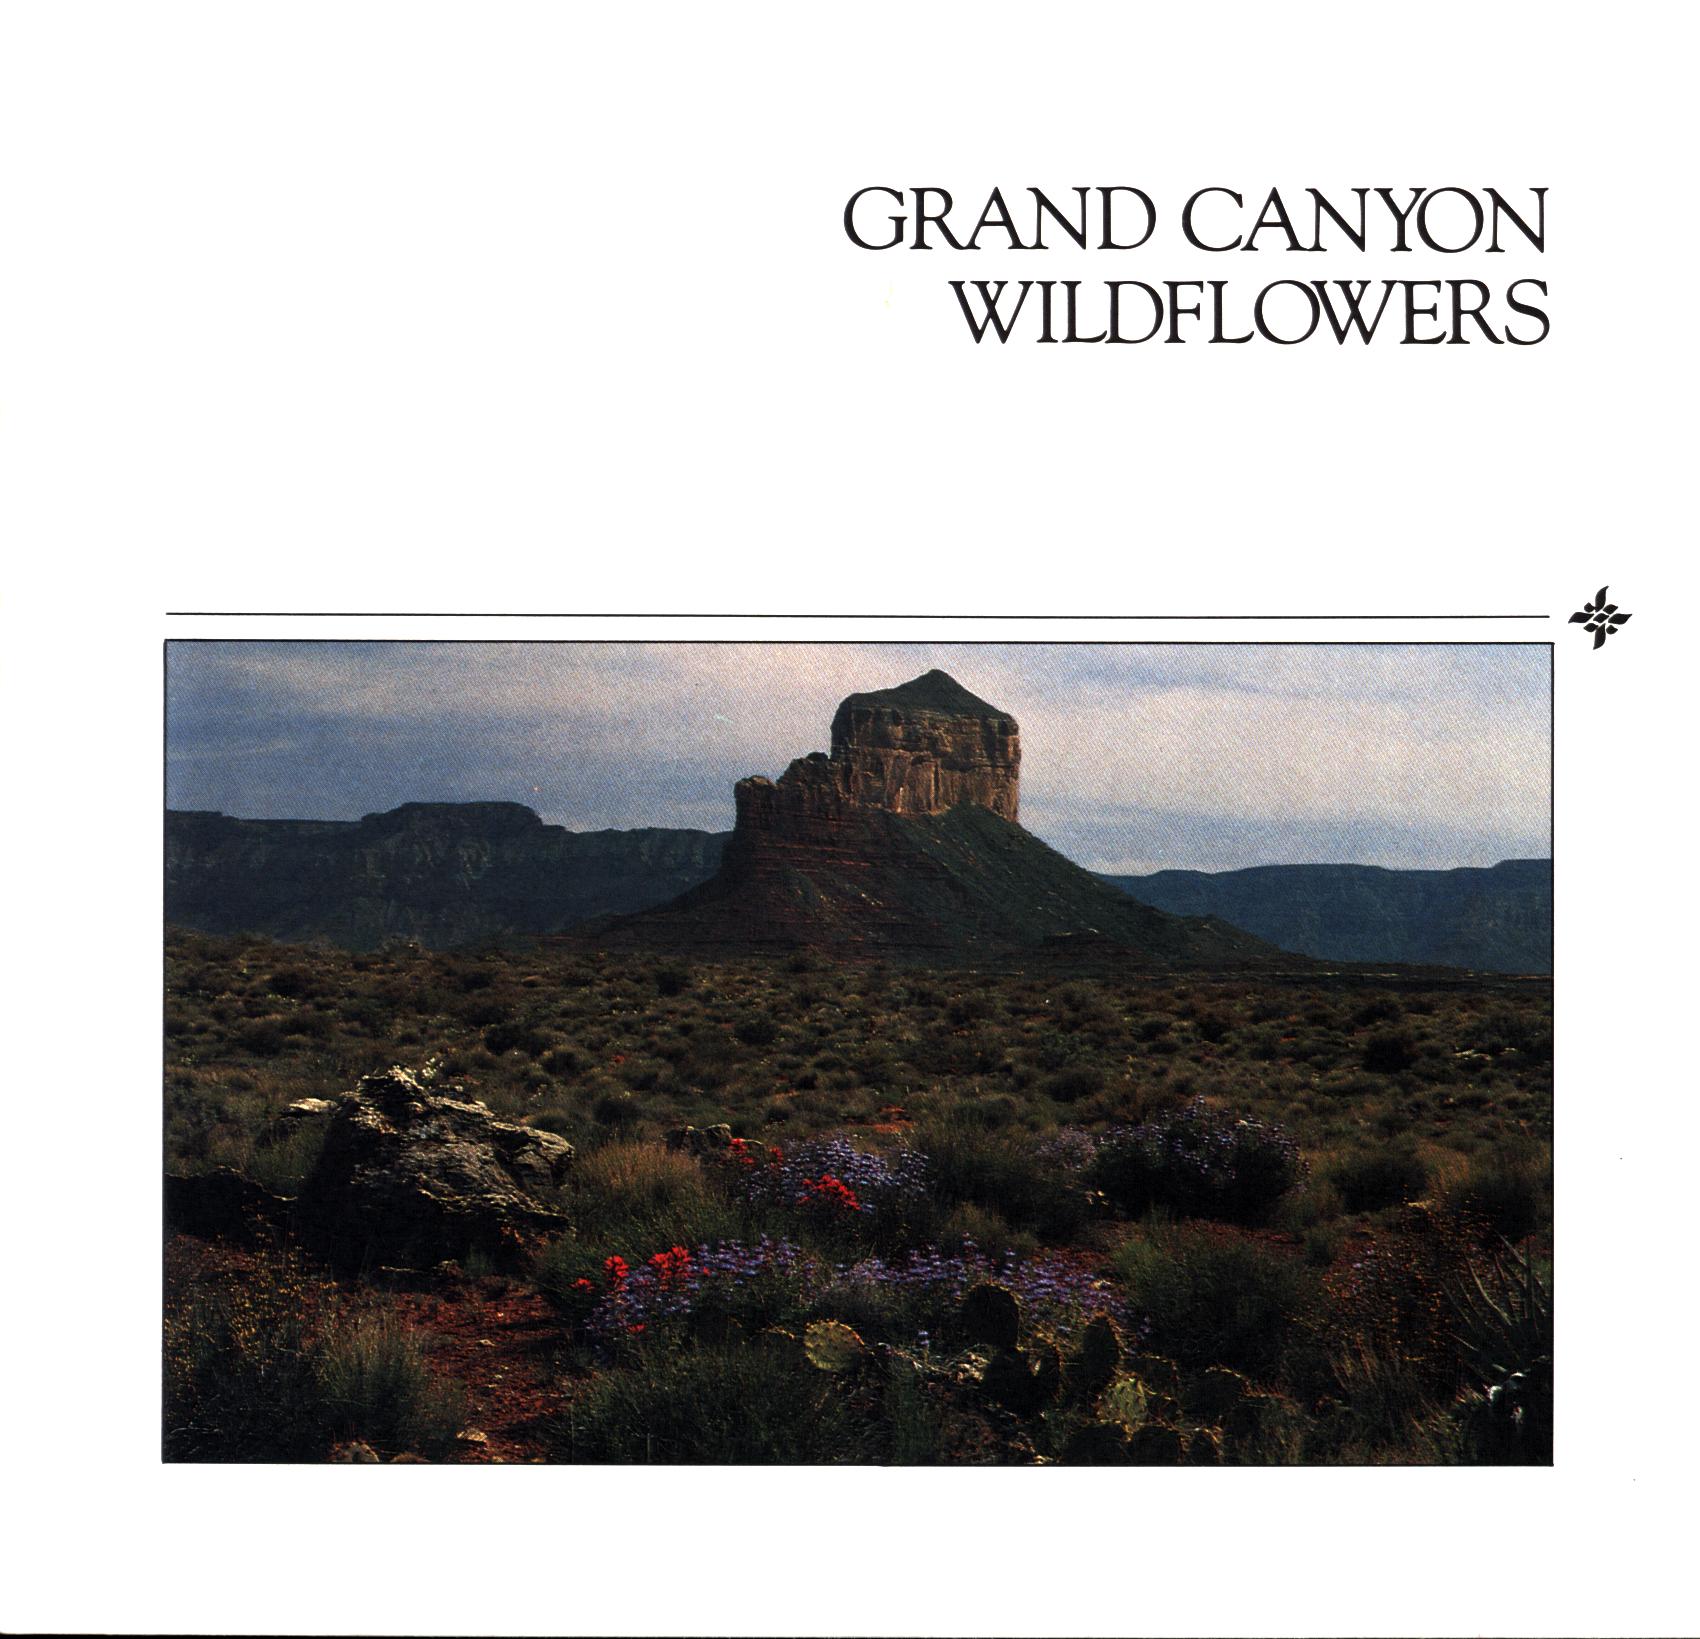 GRAND CANYON WILDFLOWERS. 